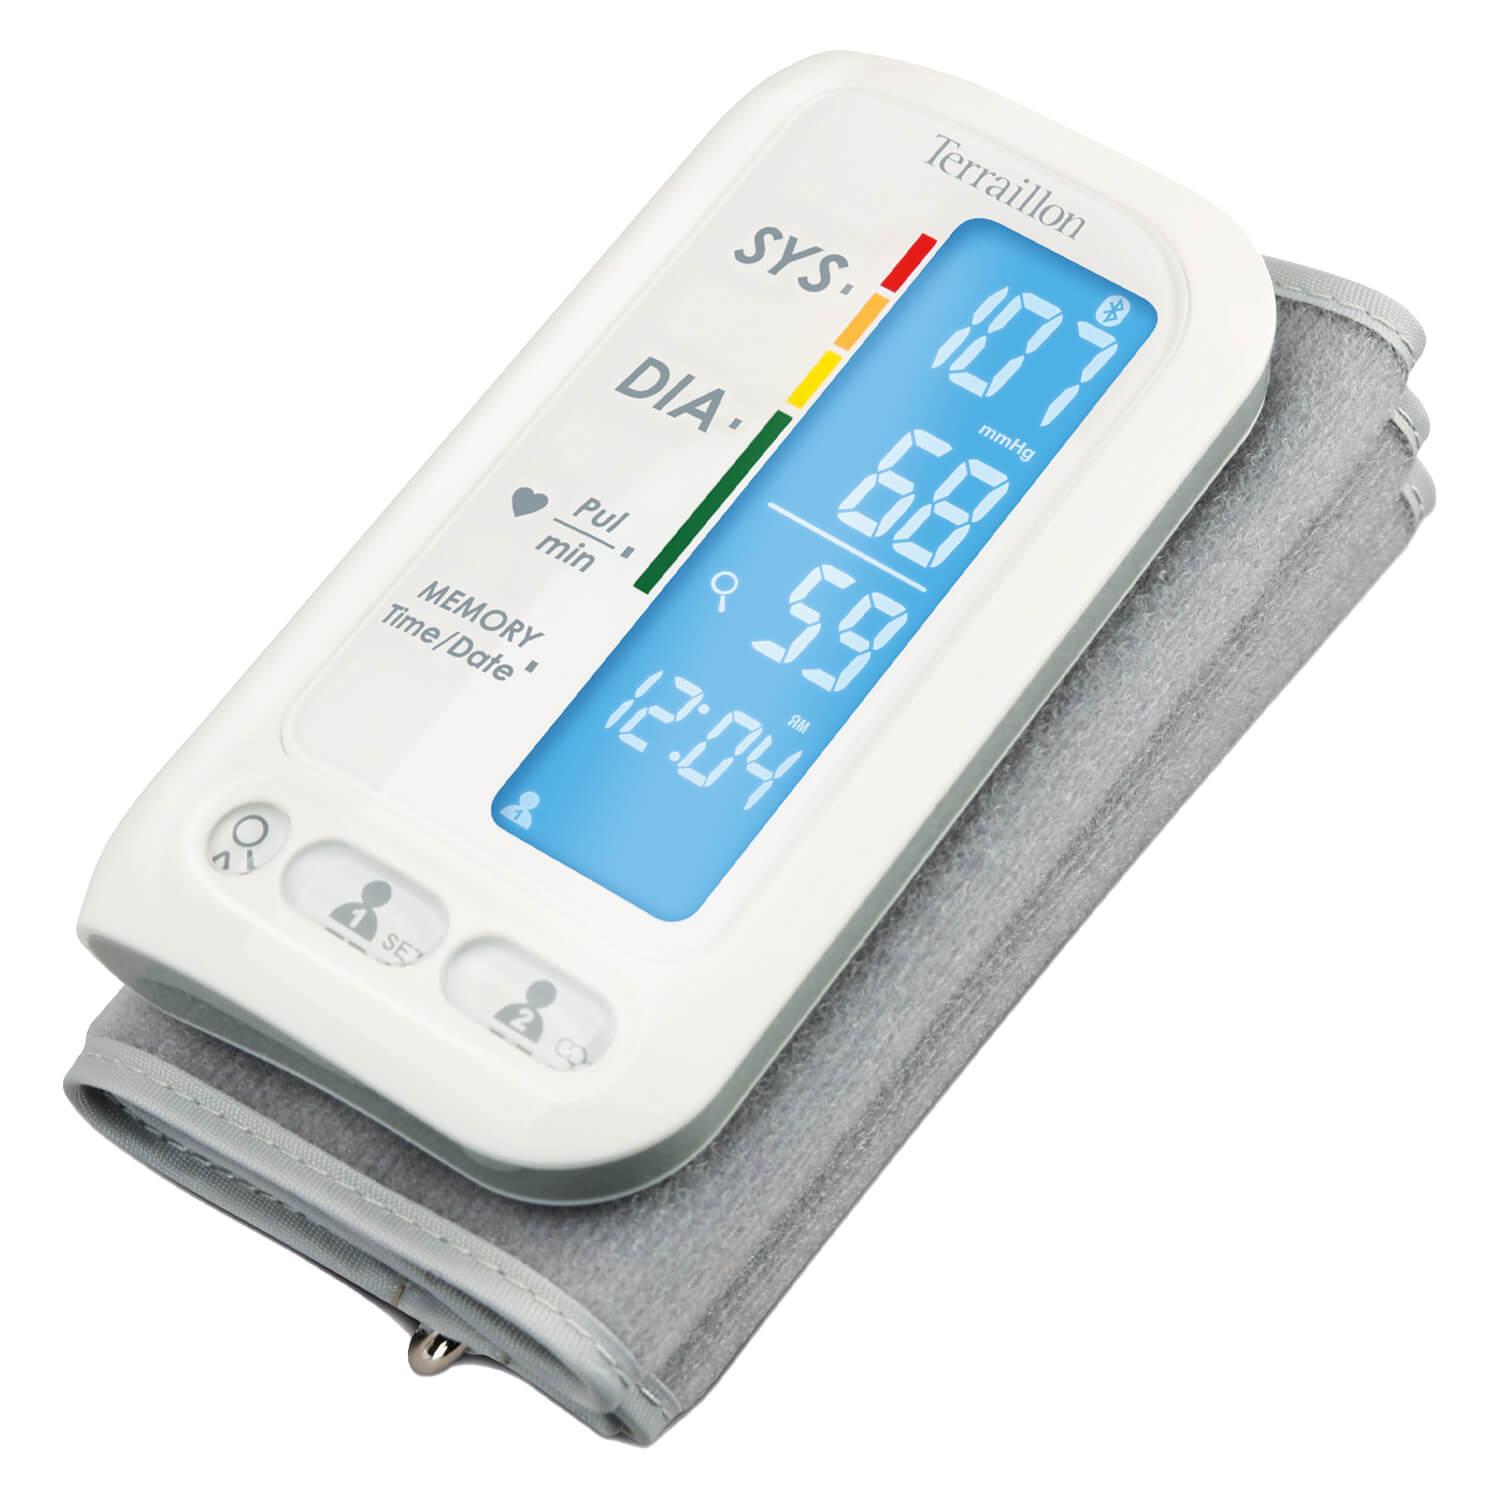 Terraillon - Tensio Bras vernetztes Armblutdruckgerät